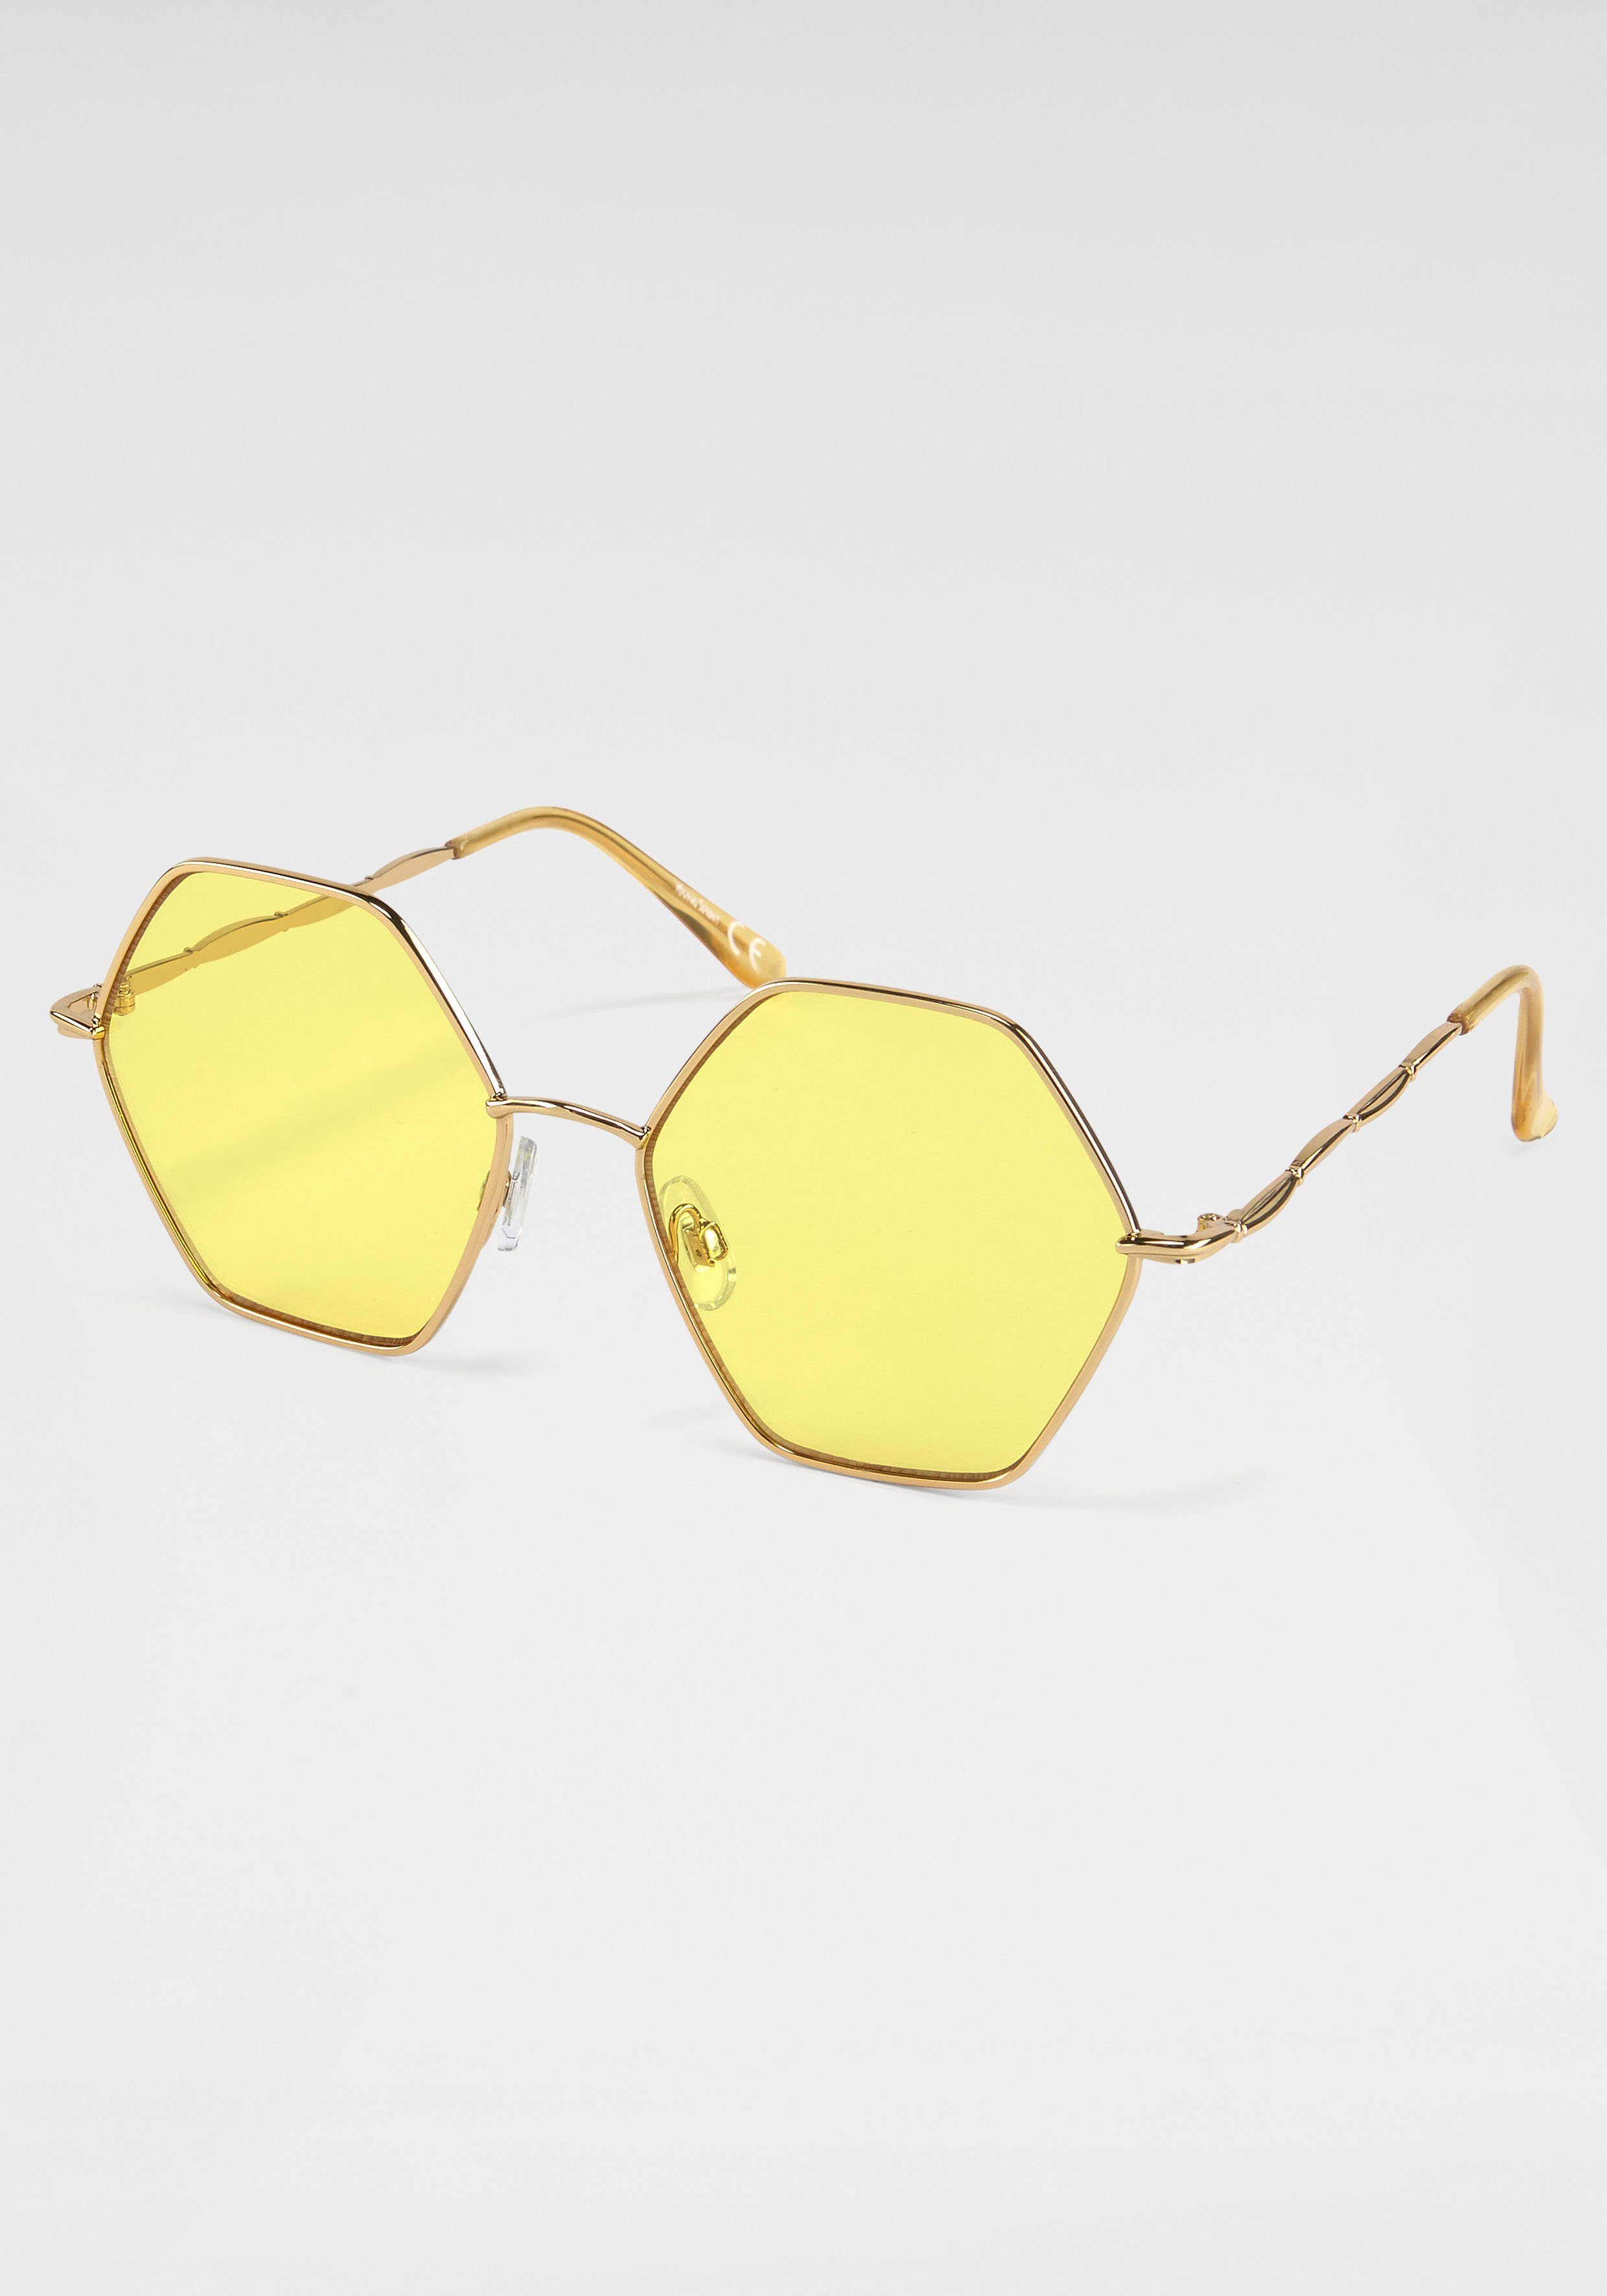 SPIRIT YOUNG gelb LONDON Eyewear Sonnenbrille